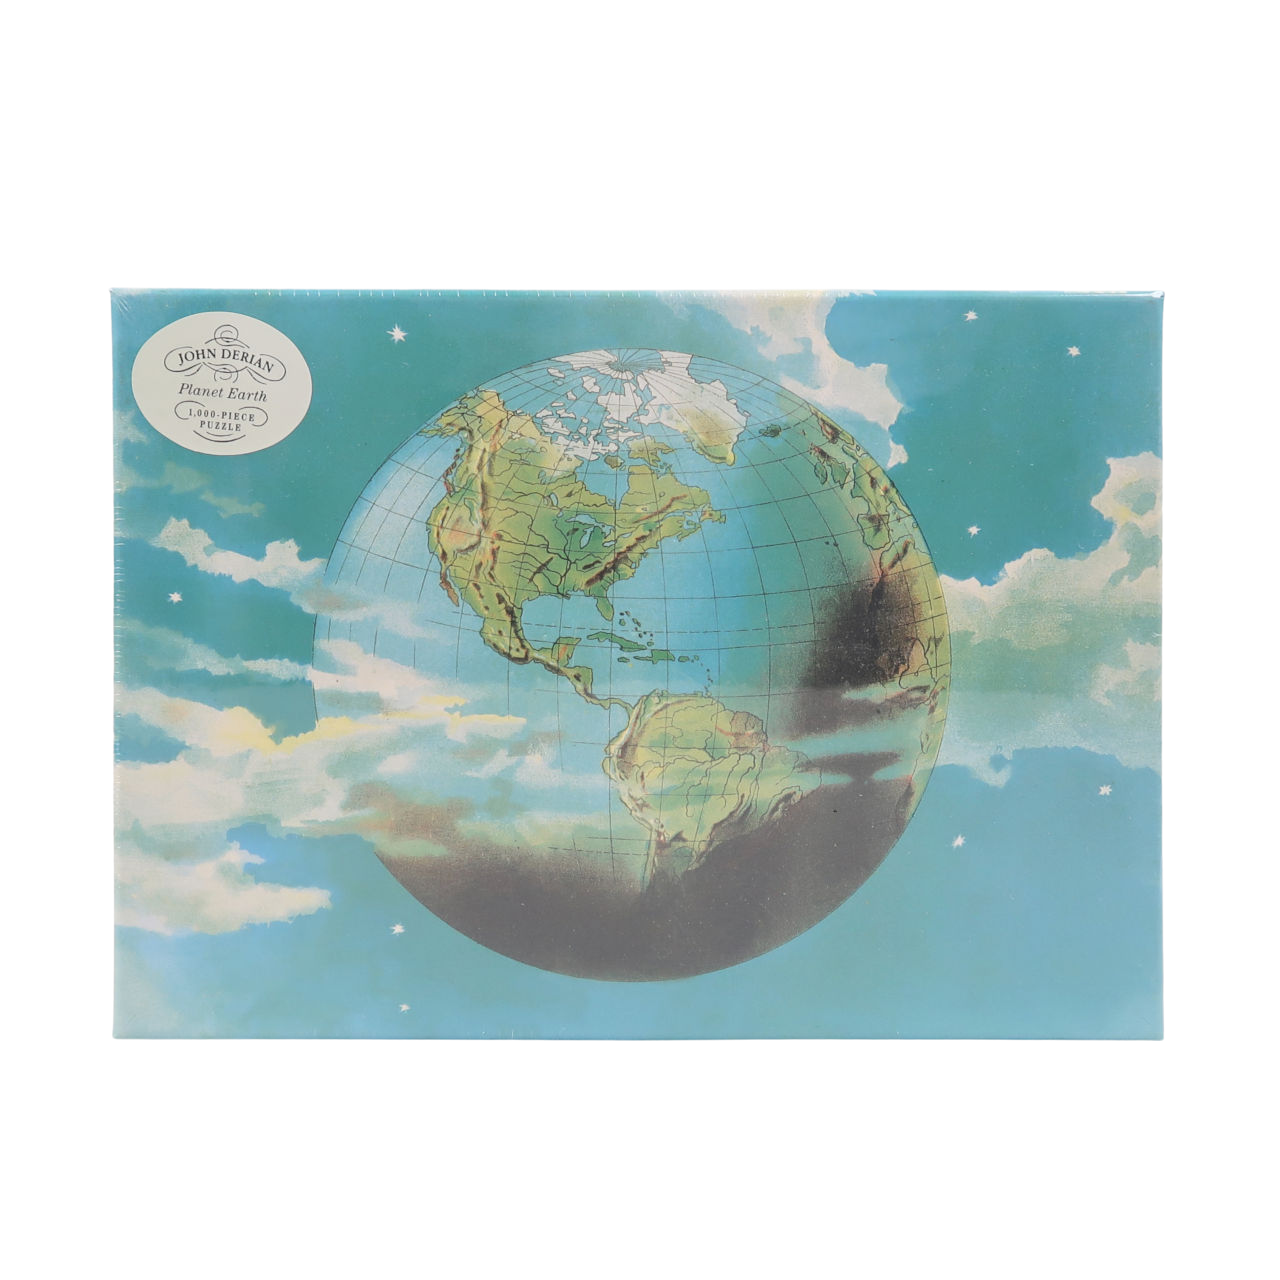 Planet Earth - John Derian - 1000 Piece Puzzle